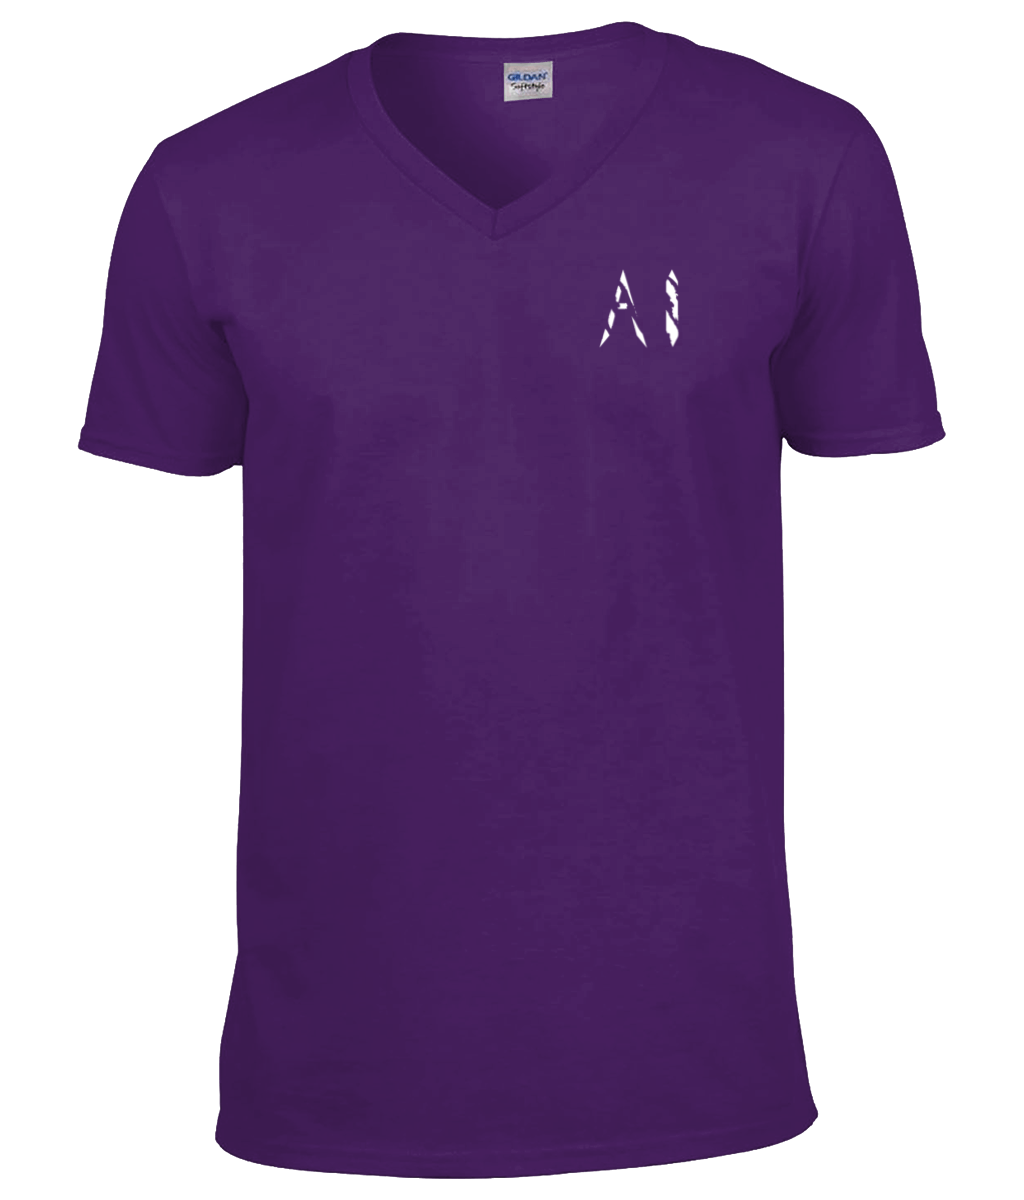 Womens Dark purple Classic V Neck T-Shirt with black AI logo on left breast